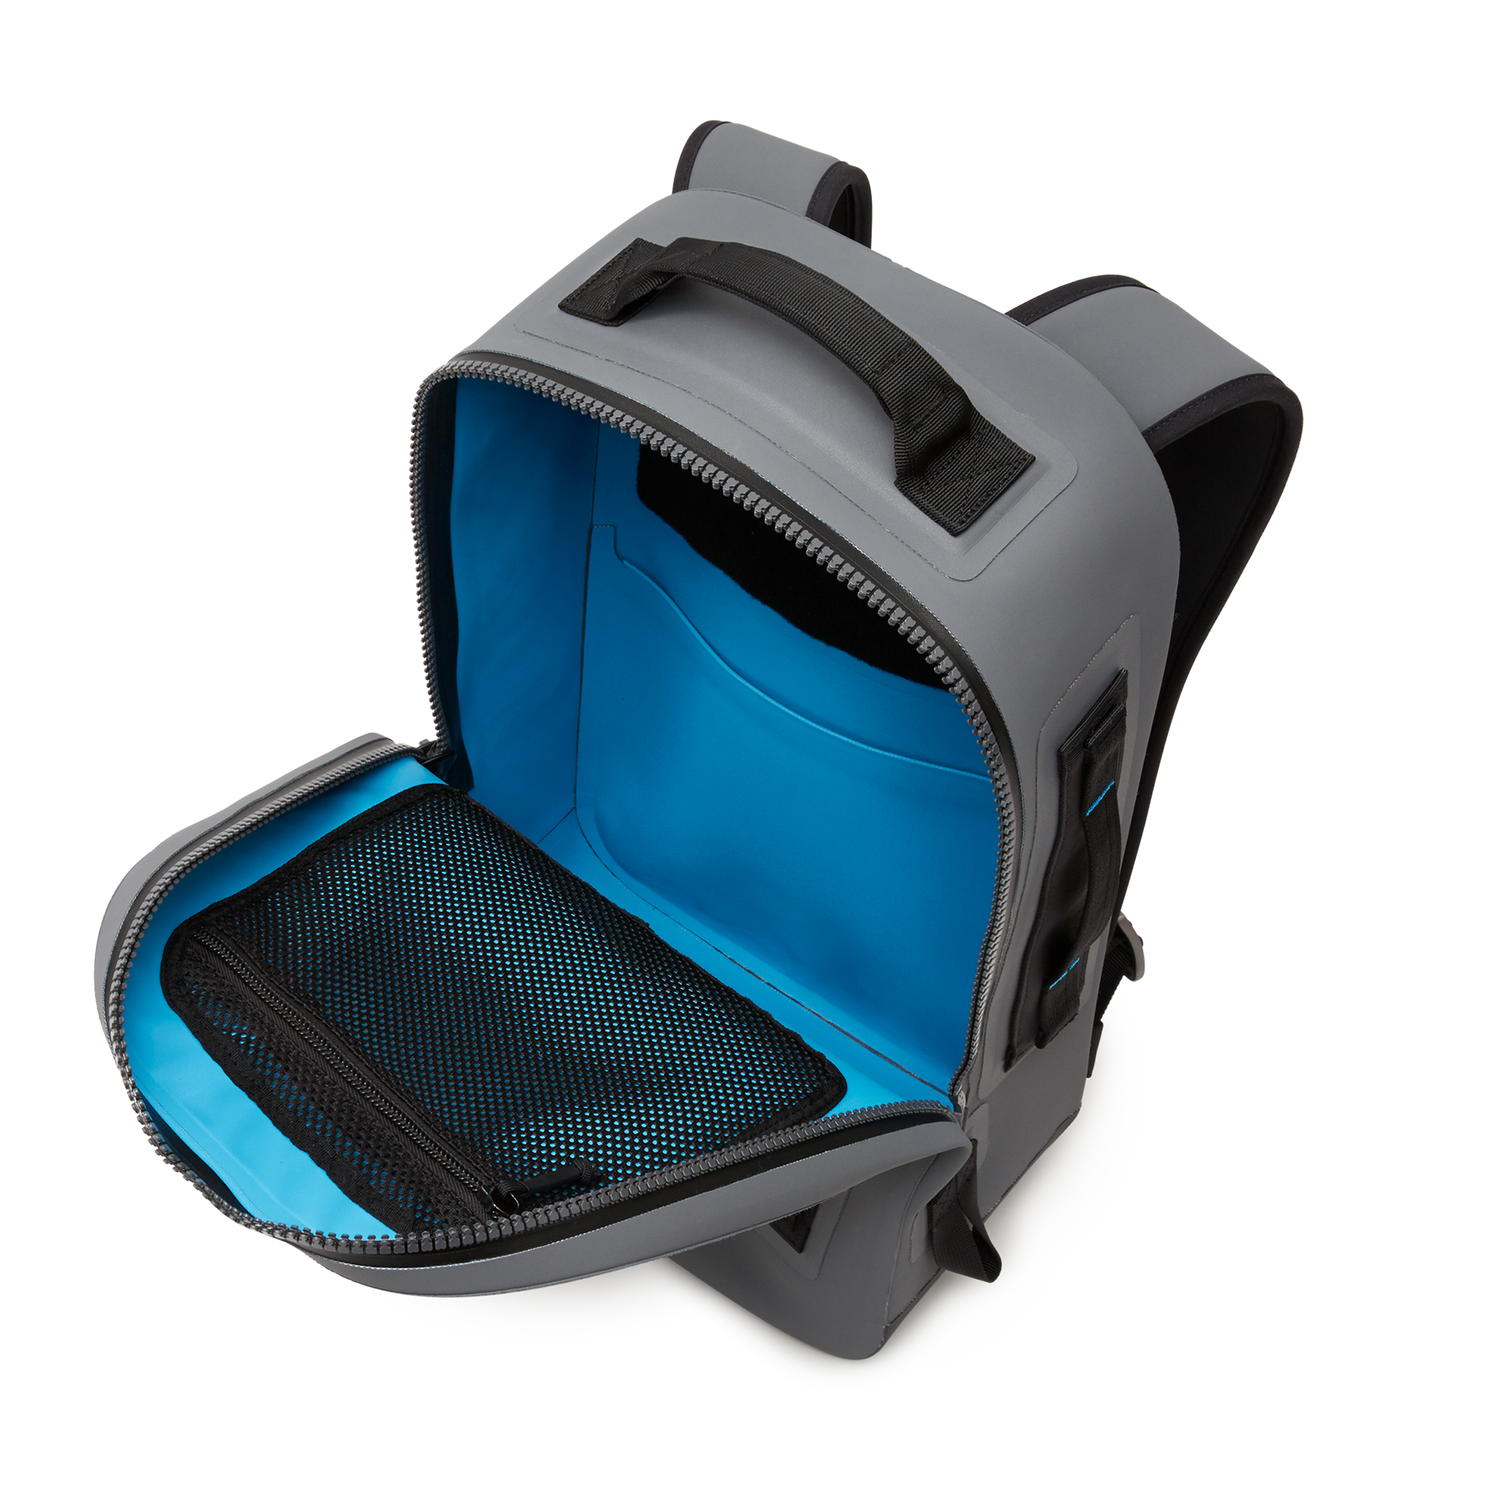 Yeti Panga Waterproof Backpack 2019 Review: Durable, Fully Submersible